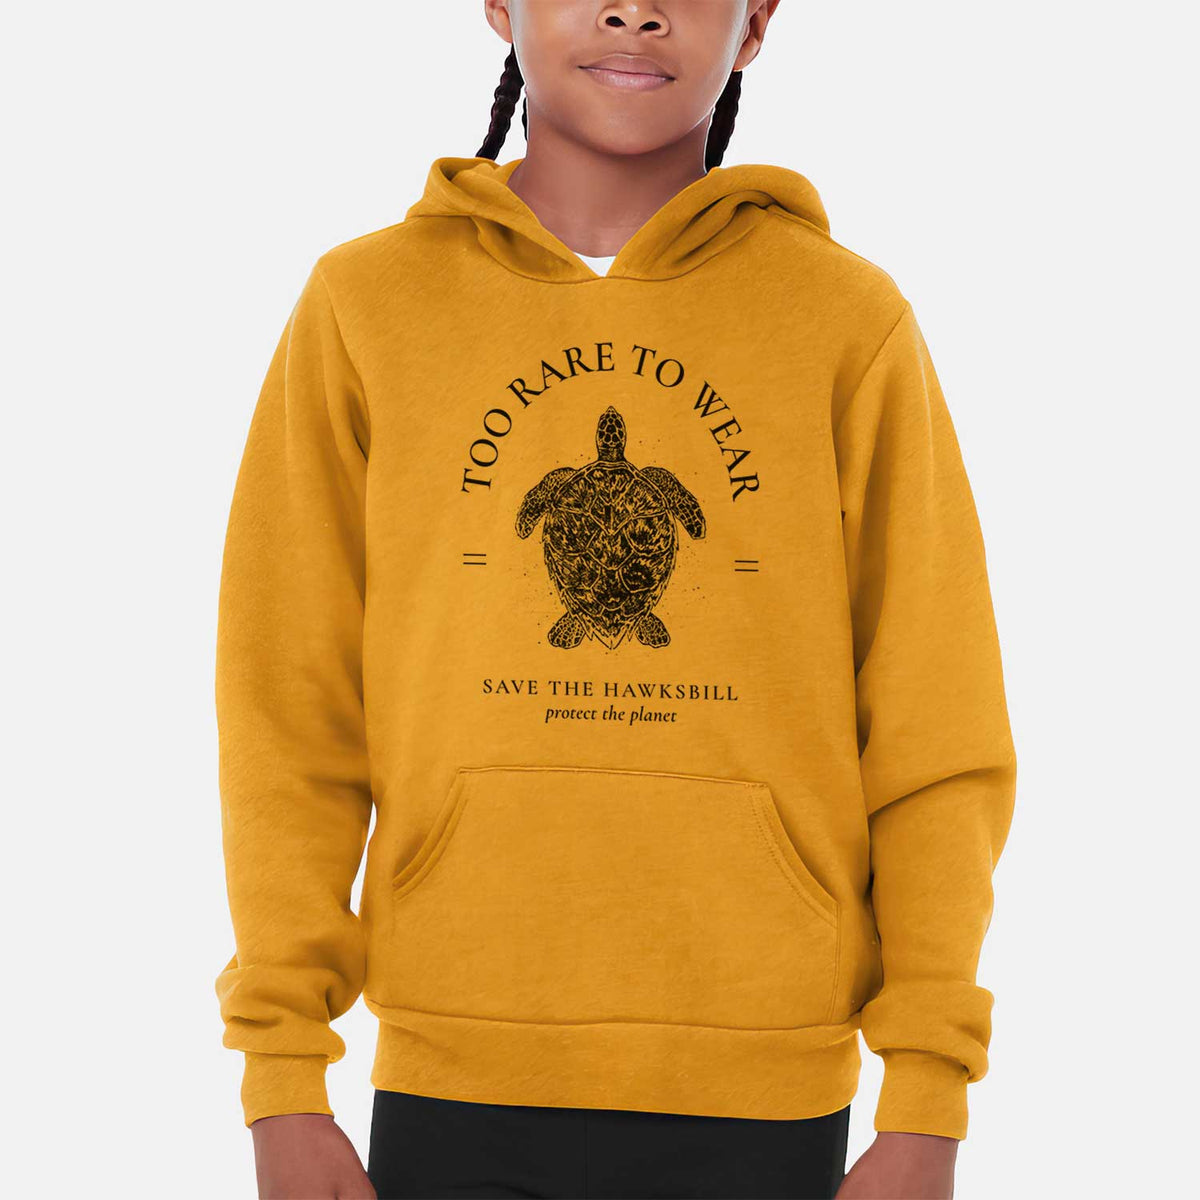 Too Rare to Wear - Save the Hawksbill - Youth Hoodie Sweatshirt